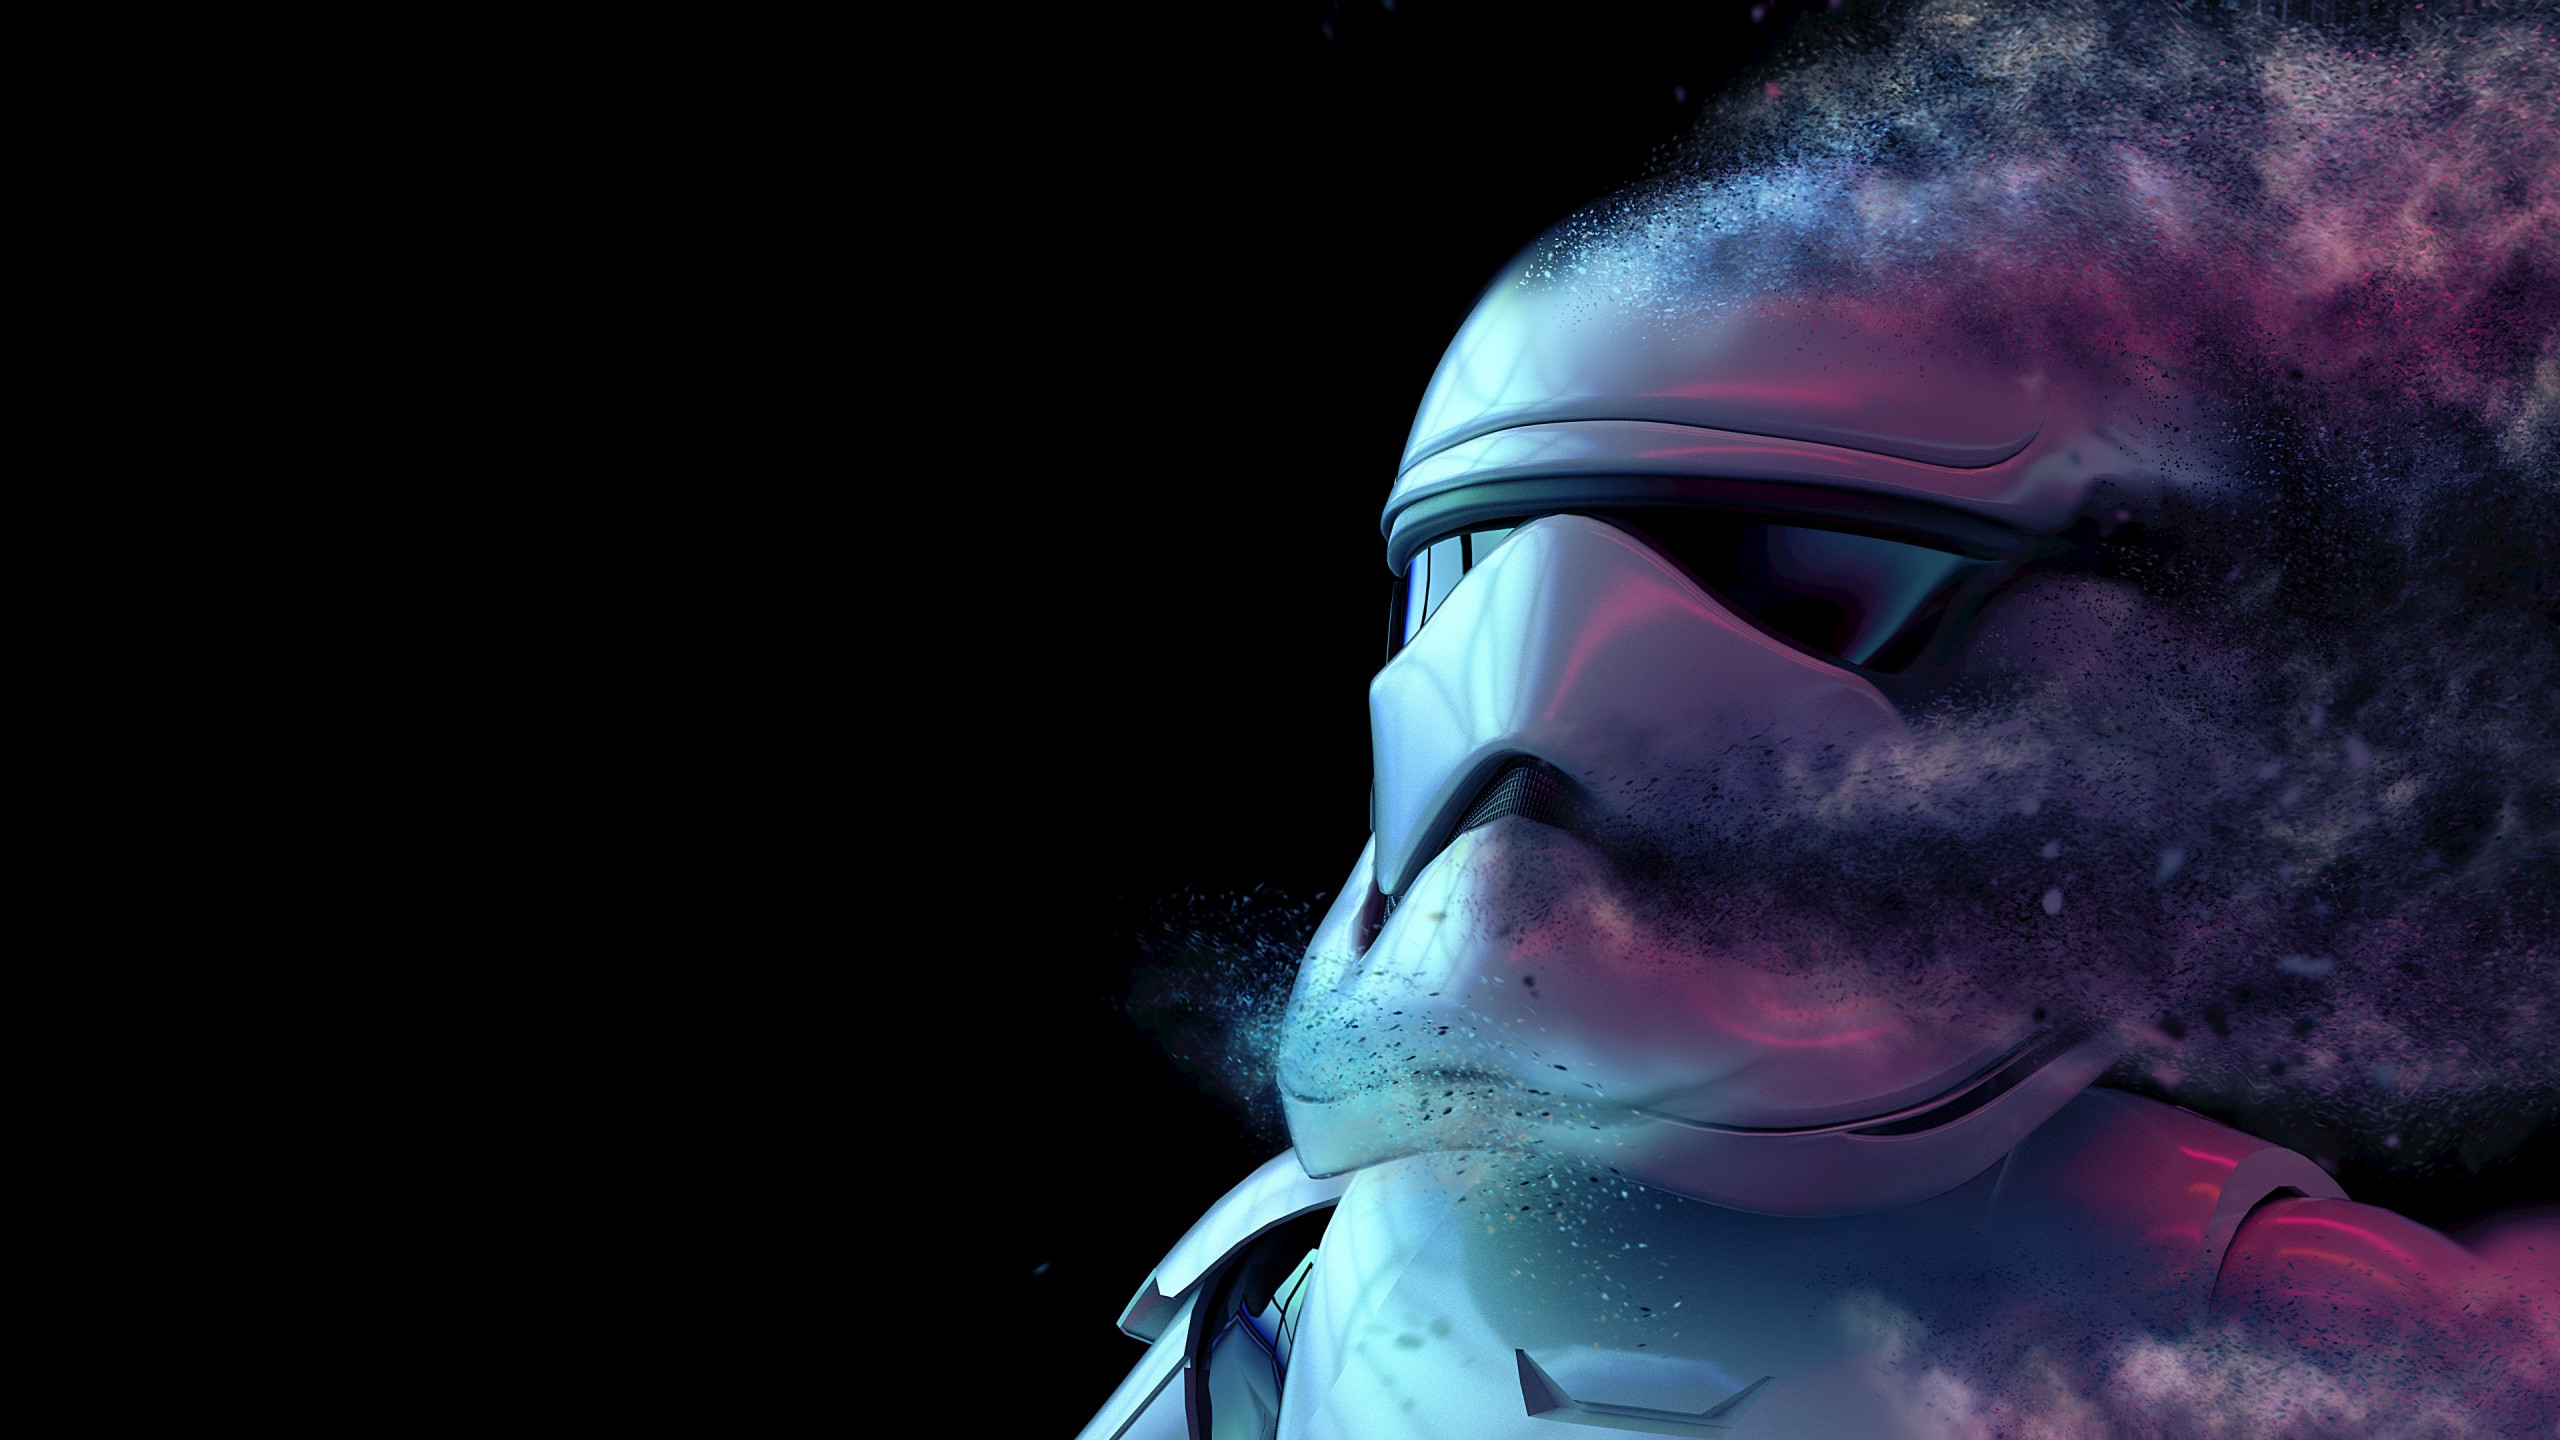 Download wallpaper: Storm Trooper from Star Wars 2560x1440